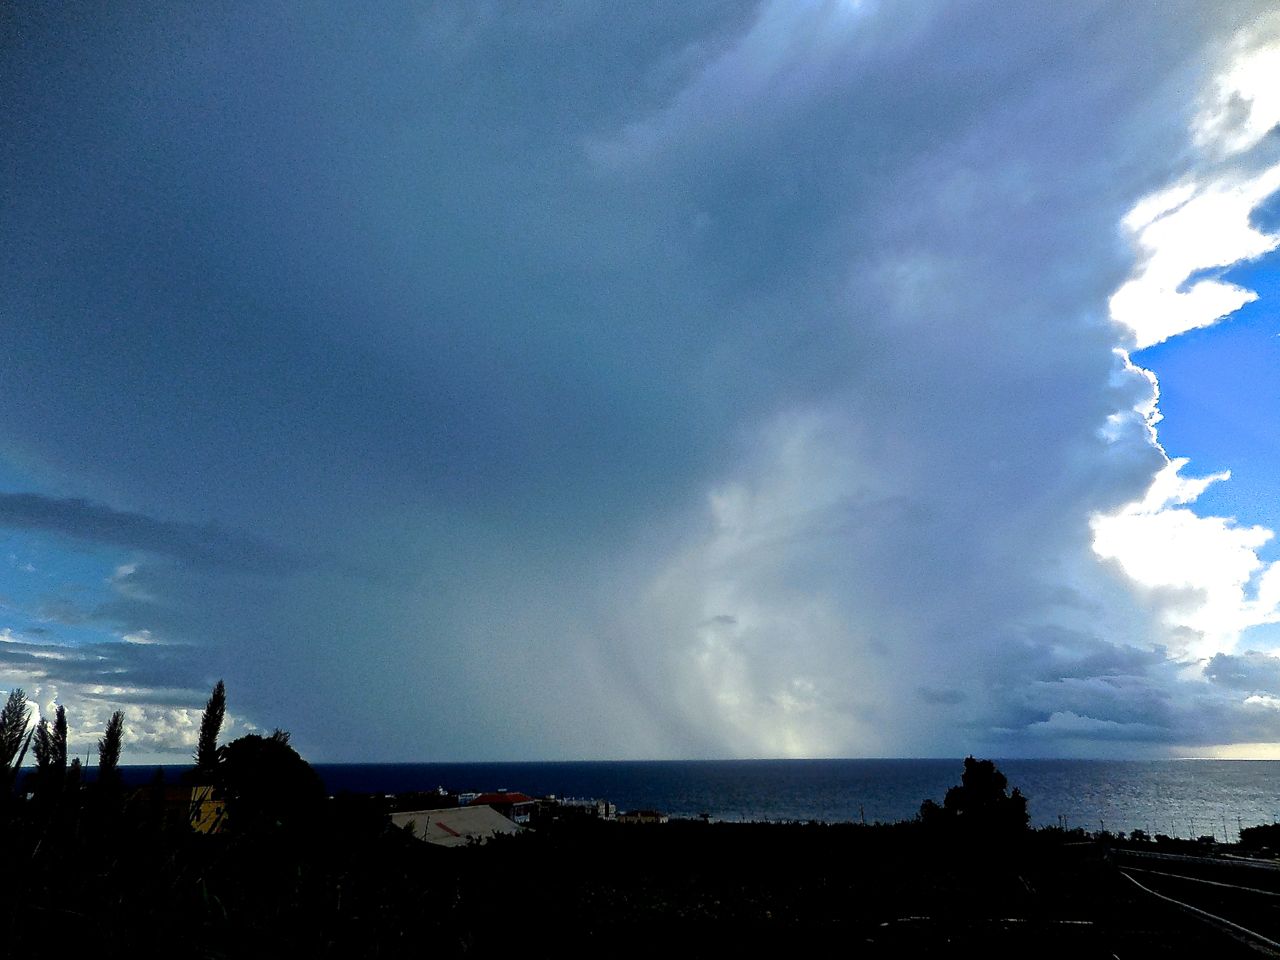 LA GOMERA ISLAND (Canary Islands): Severe weather alert: Heavy rain predicted1280 x 960